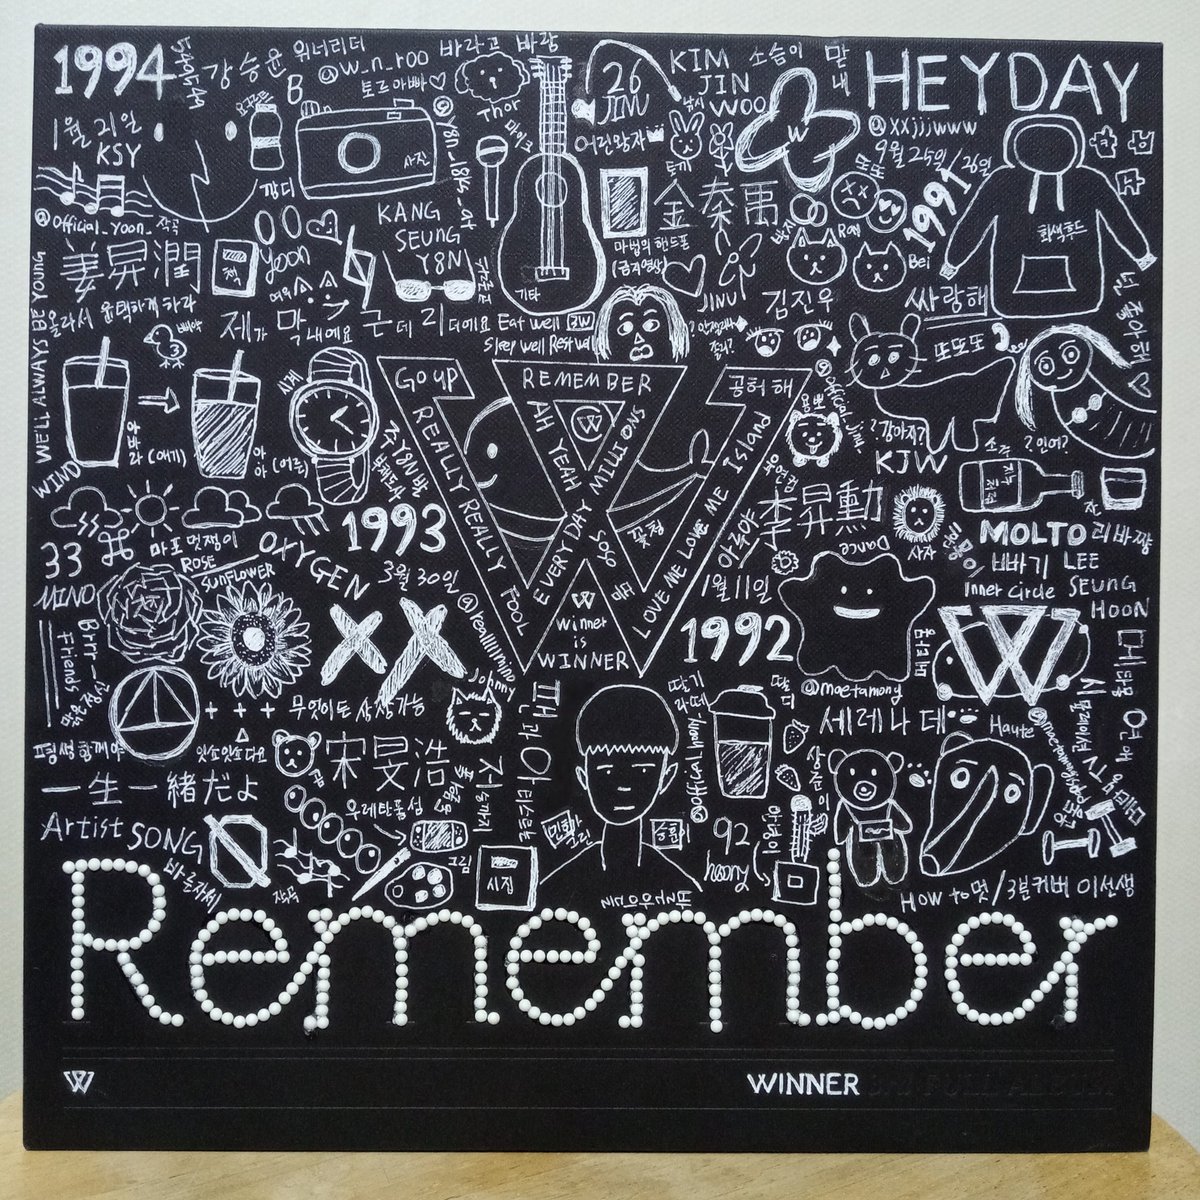 [EVENT] REMEMBER ALBUM Artwork by INNER CIRCLE  #PaintingREMEMBER_WINNER  #WINNER  #REMEMBER  #위너 @yginnercircle  @yg_winnercity 